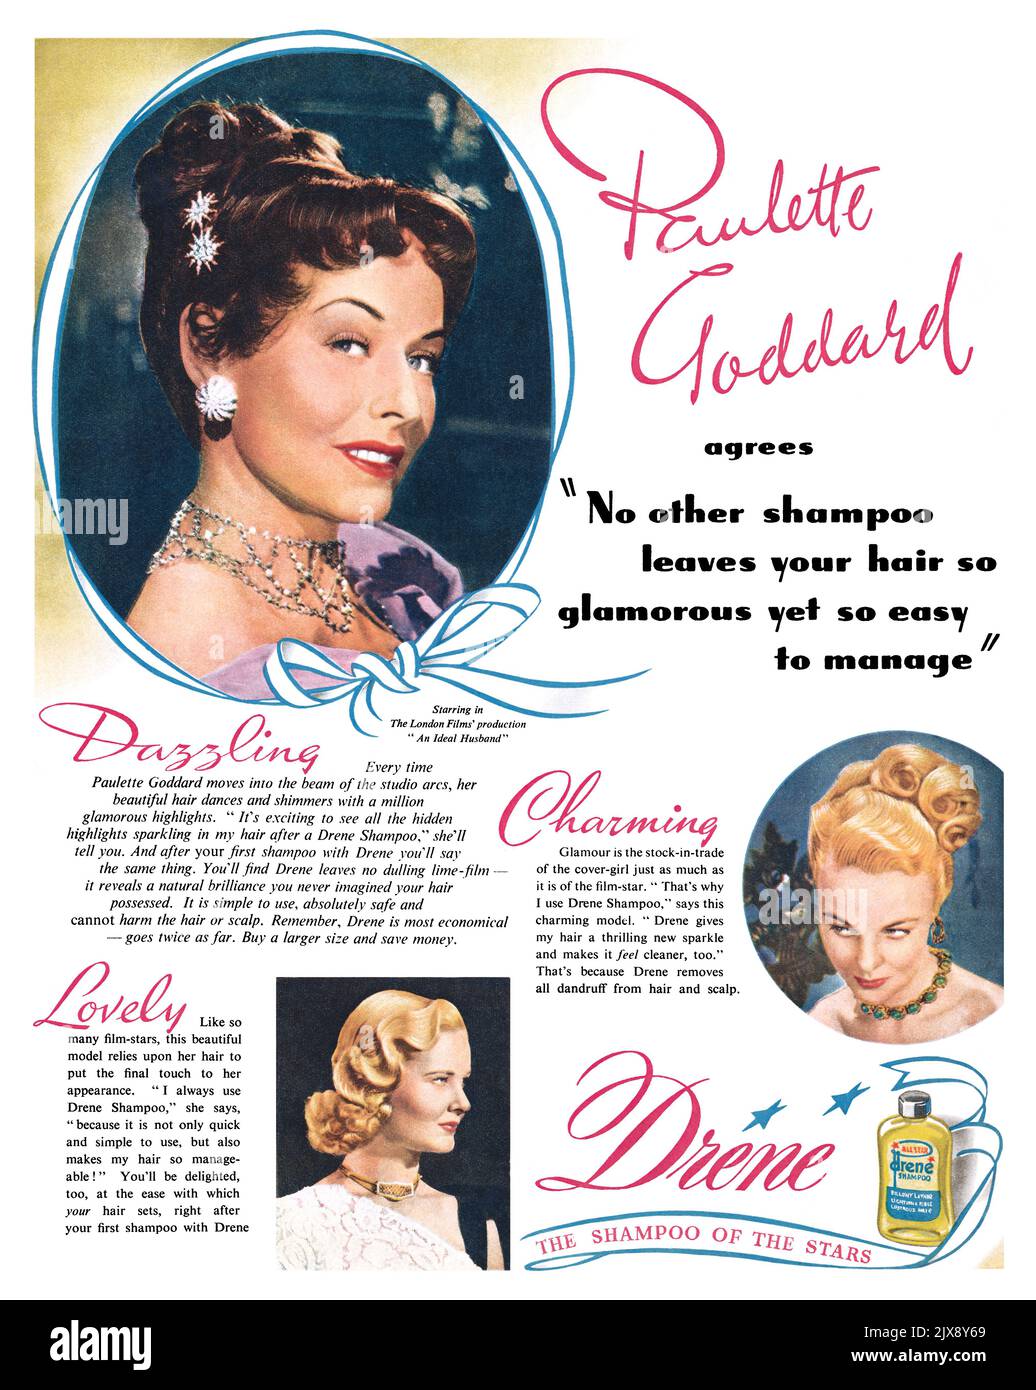 1947 British advertisement for Drene Shampoo, featuring movie actress Paulette Goddard. Stock Photo